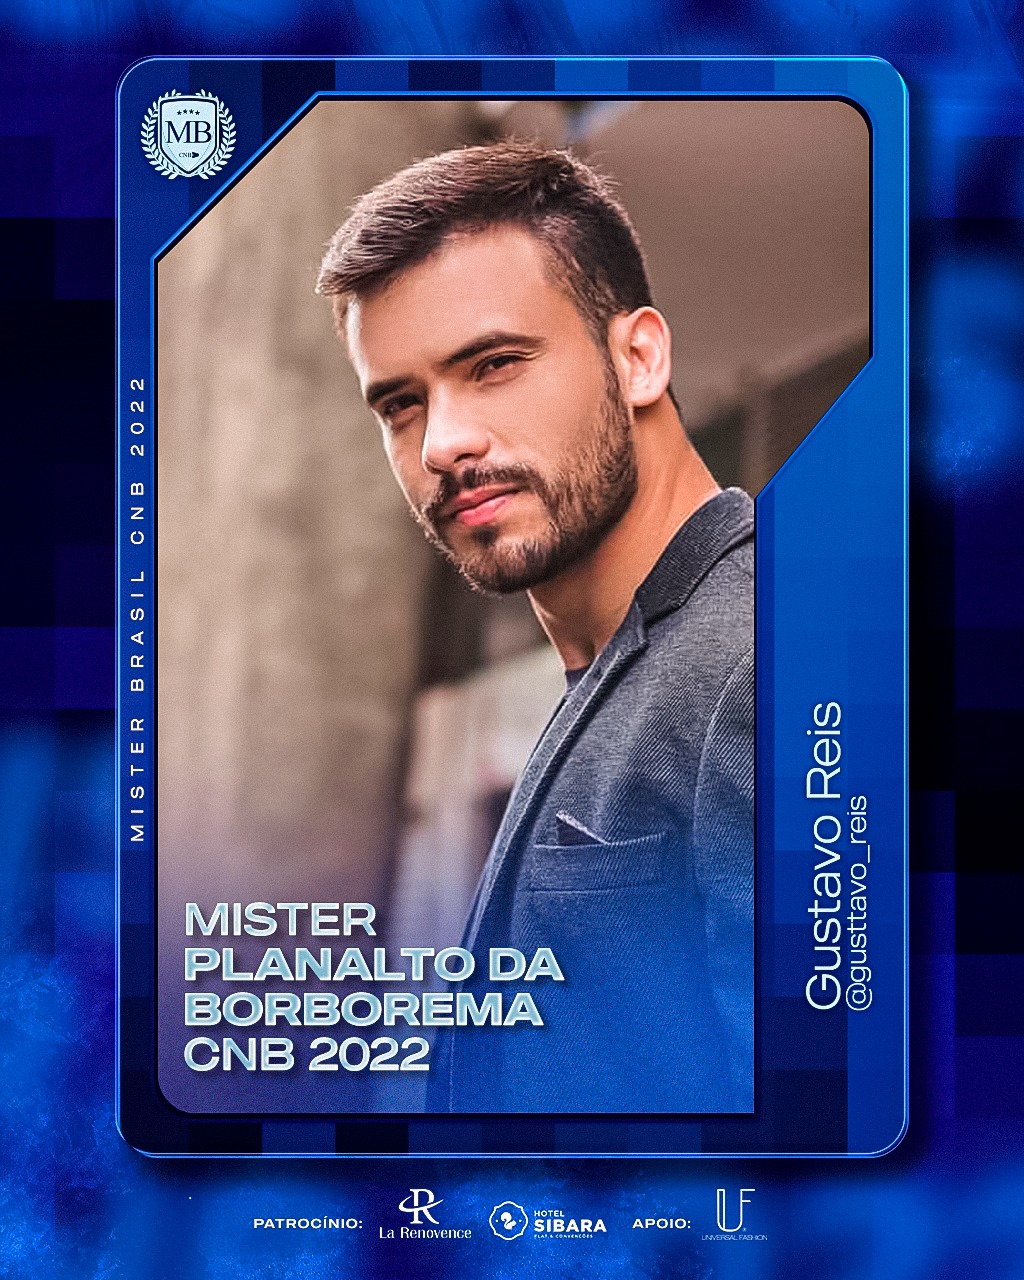 Mister Brasil CNB 2022 is Mister Caminhos do Contestado - Page 3 27905310